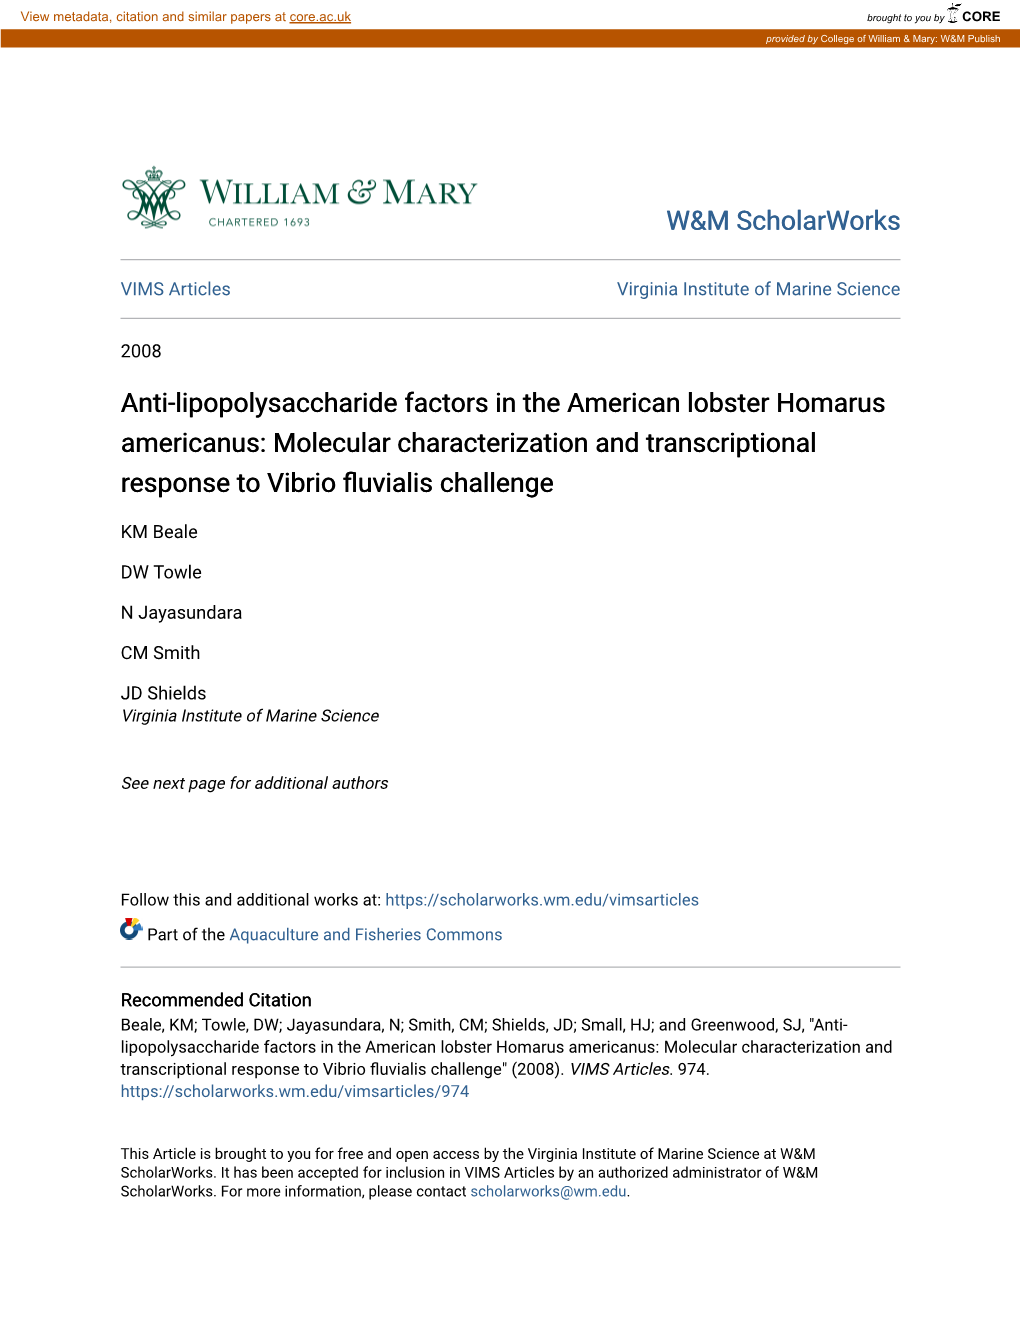 Anti-Lipopolysaccharide Factors in the American Lobster Homarus Americanus: Molecular Characterization and Transcriptional Response to Vibrio Fluvialis Challenge